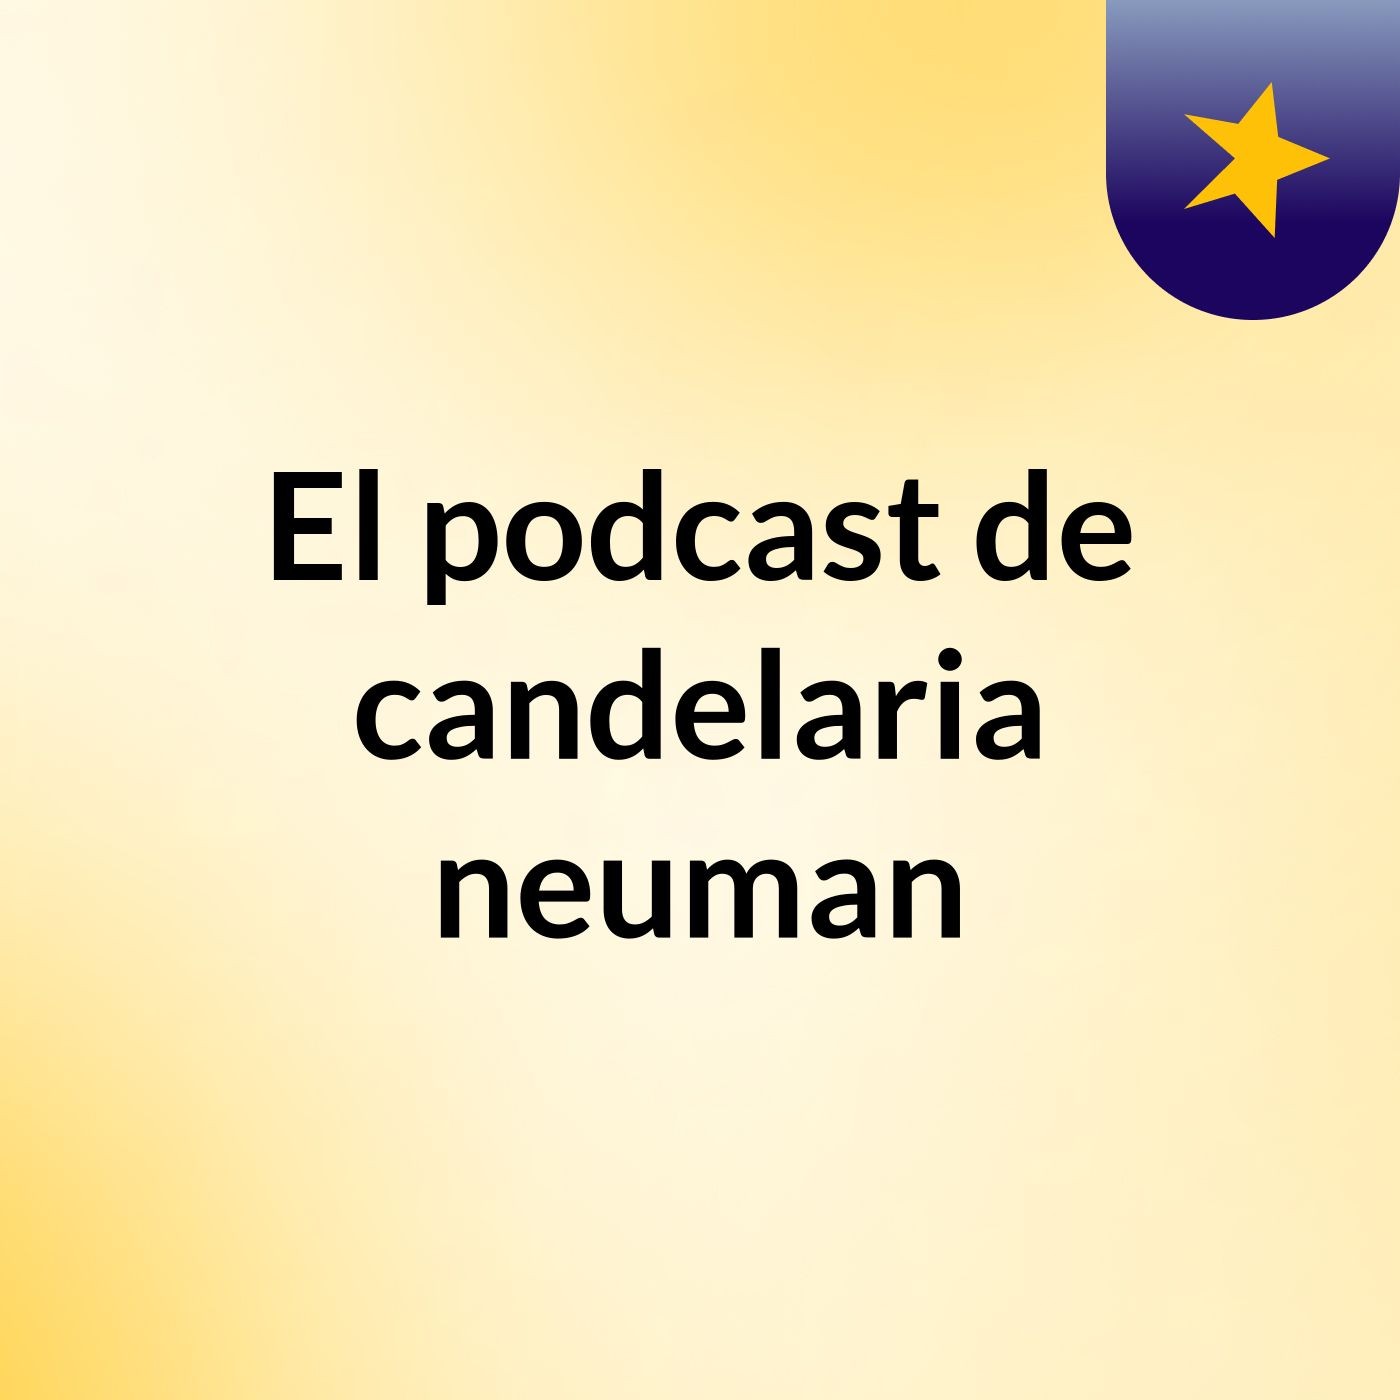 El podcast de candelaria neuman